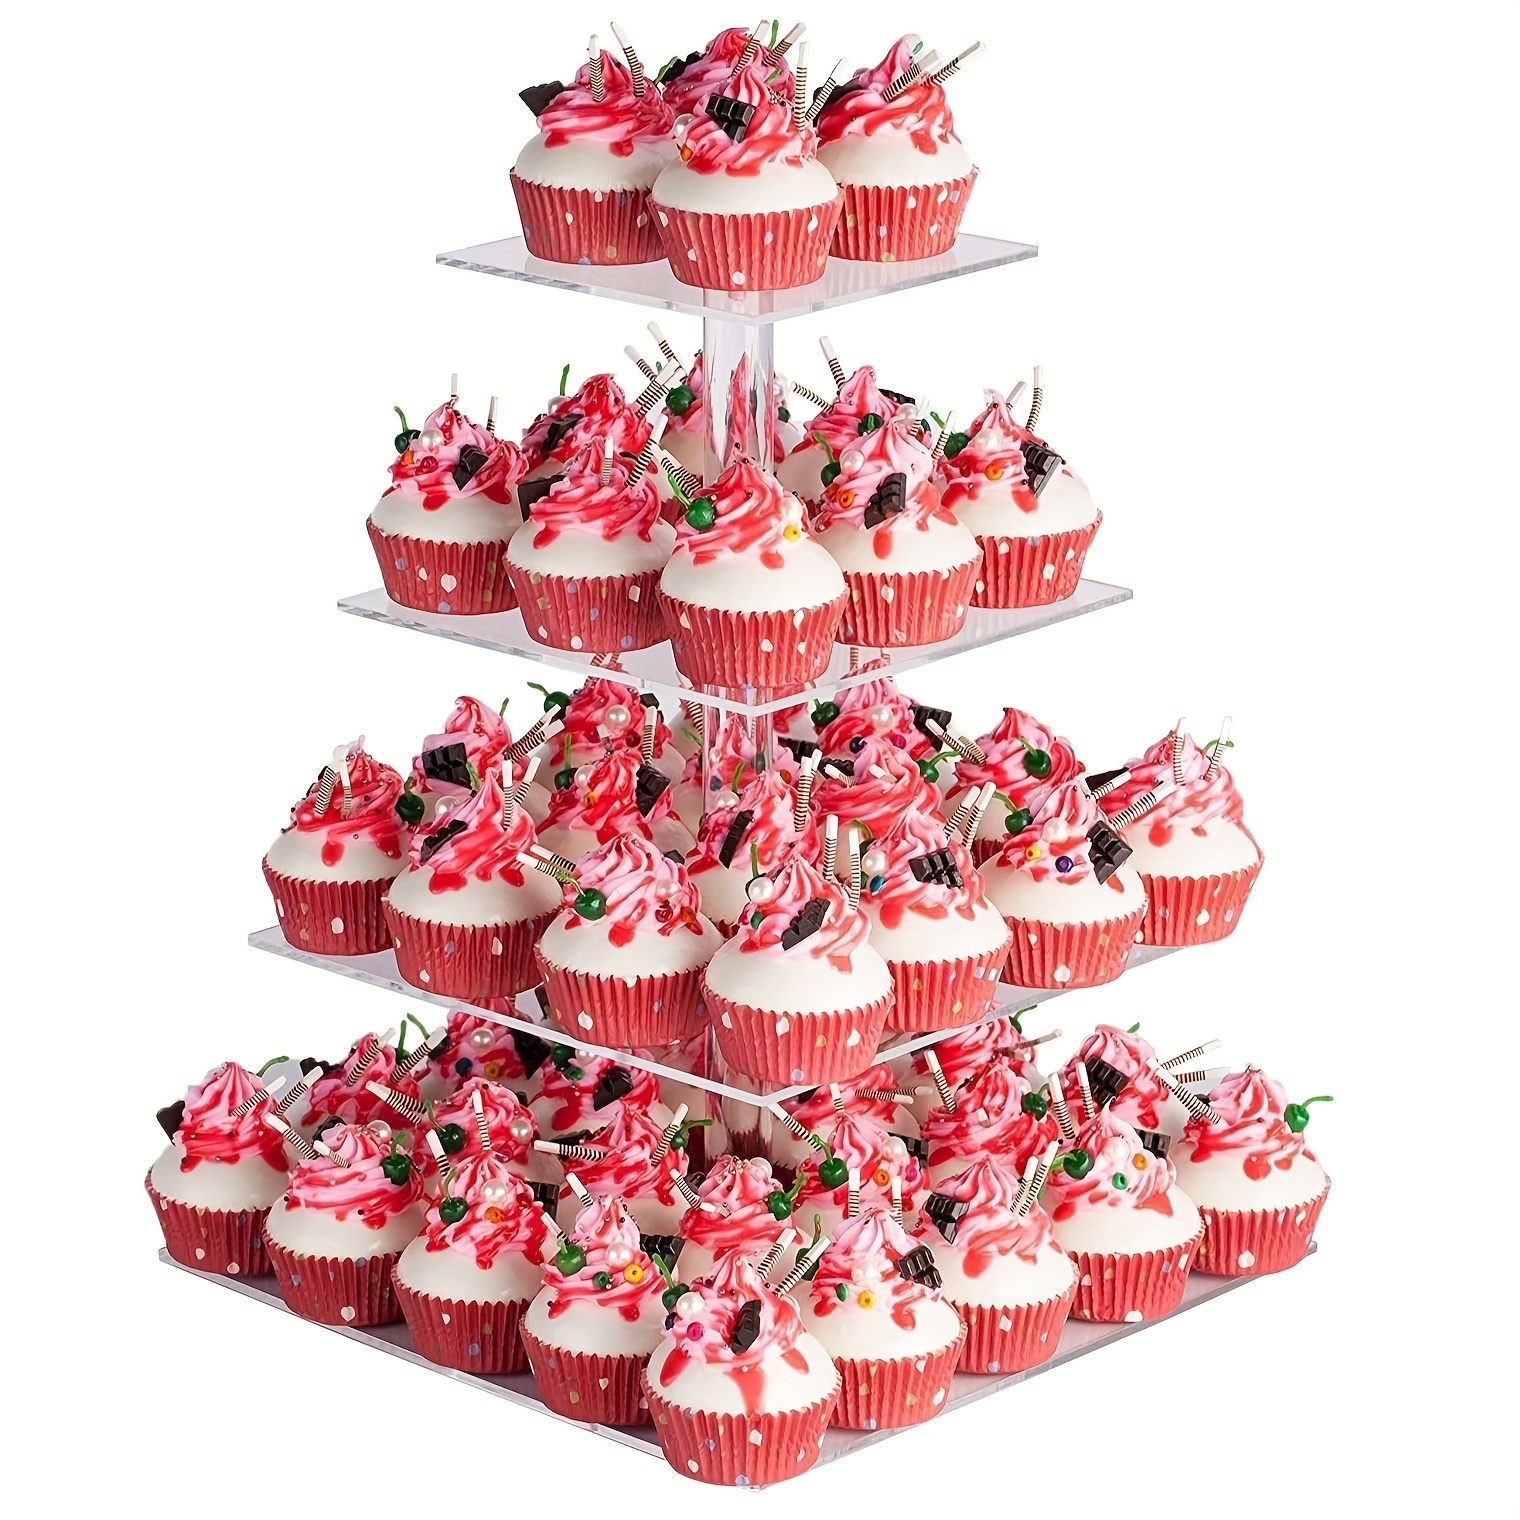 

1pc 4 Tier Cupcake Stand, Acrylic Cupcake Tower Stand, Premium Cupcake Holder, Clear Cupcake Display Tree Tower Stand For 52 Cupcakes, Display For Pastry Wedding Birthday Party